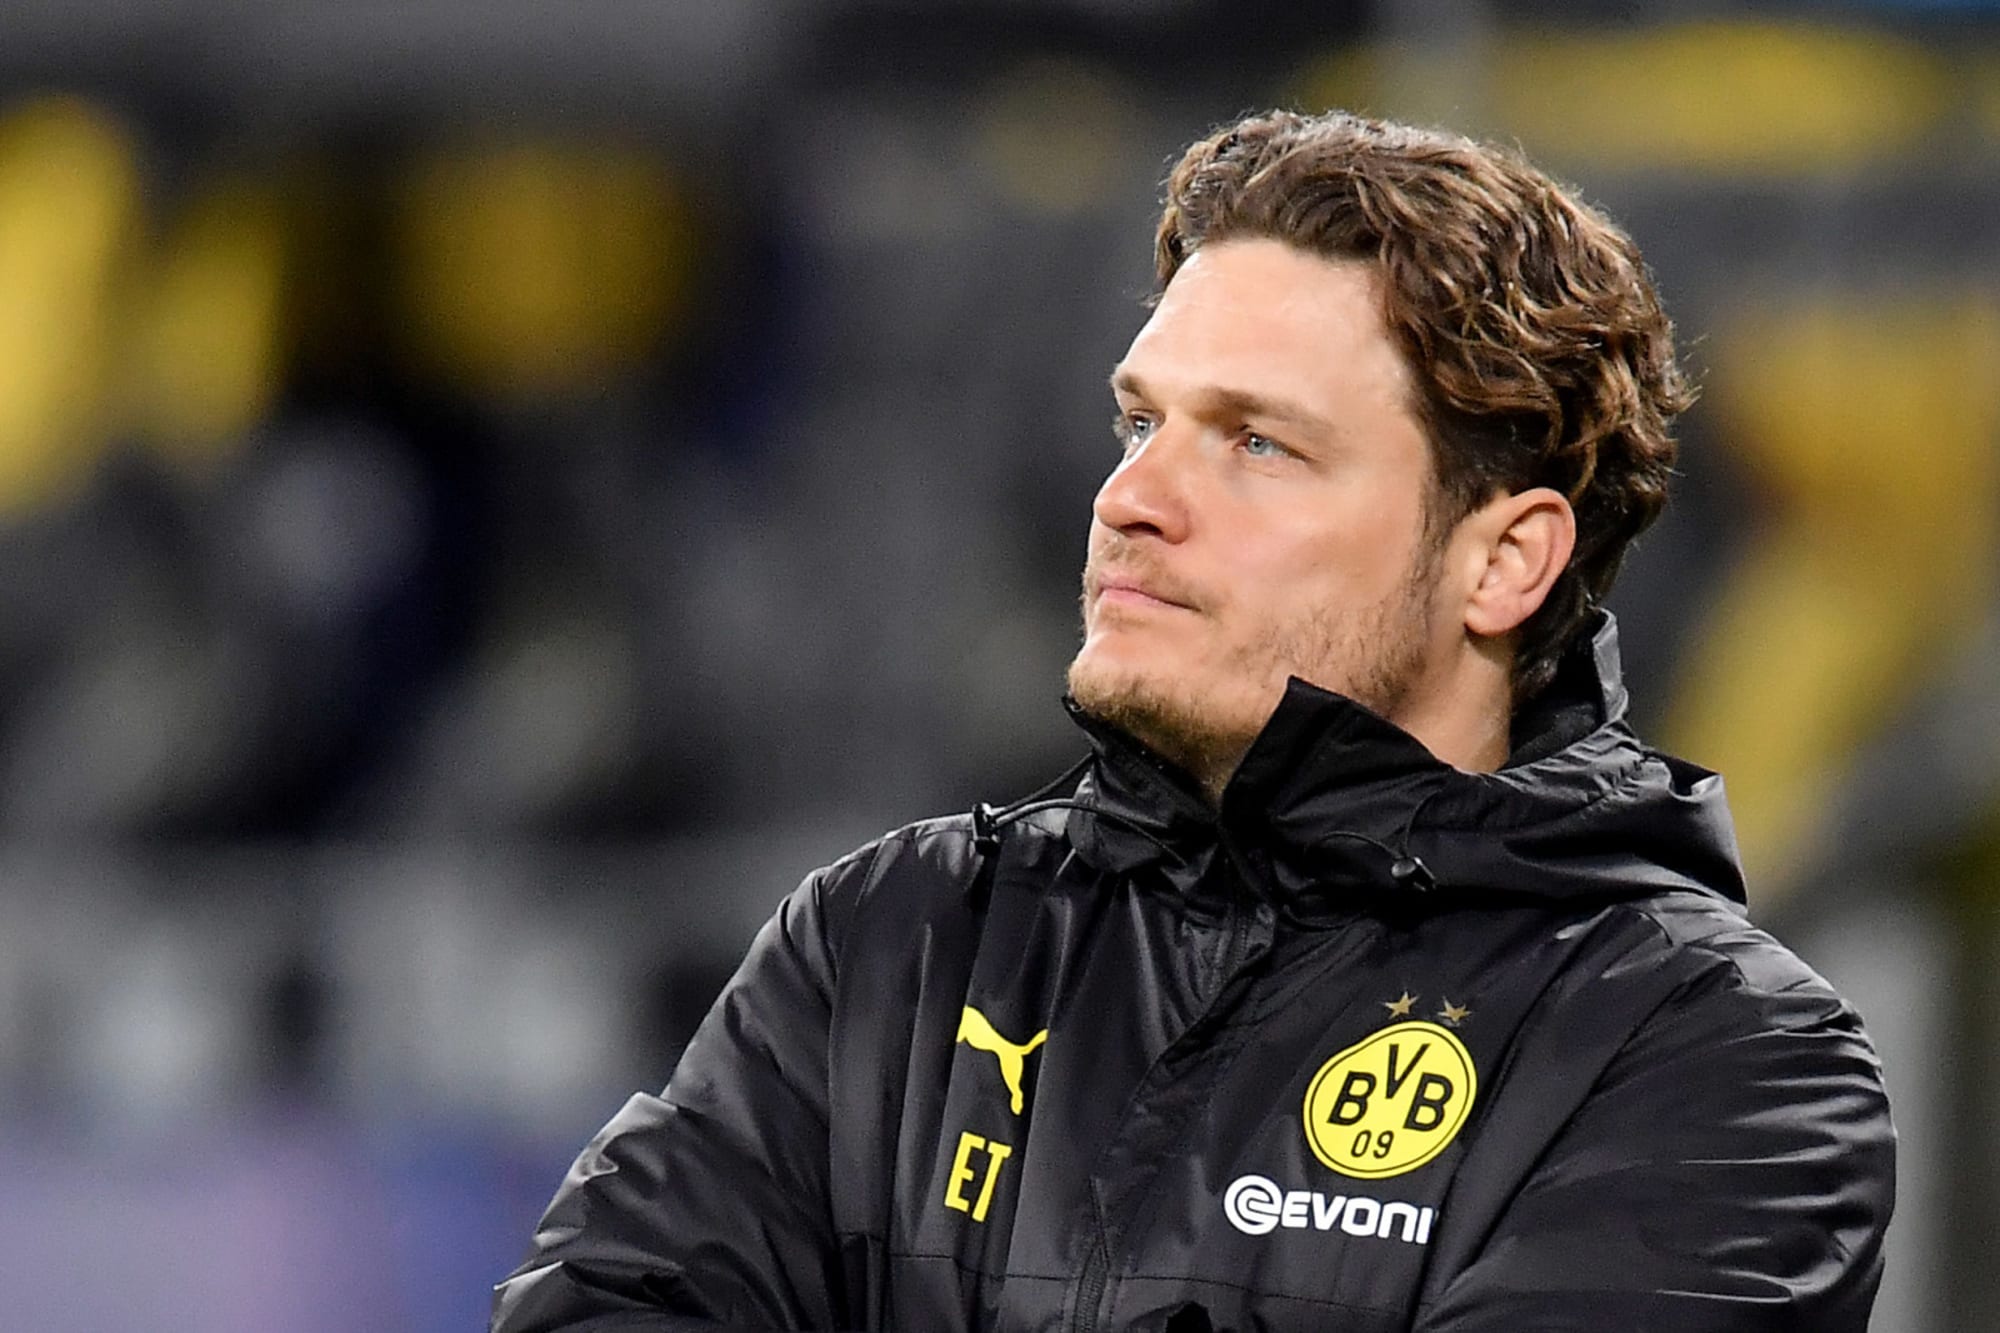 Borussia Dortmund interim head coach Edin Terzic a target for Wolfsburg